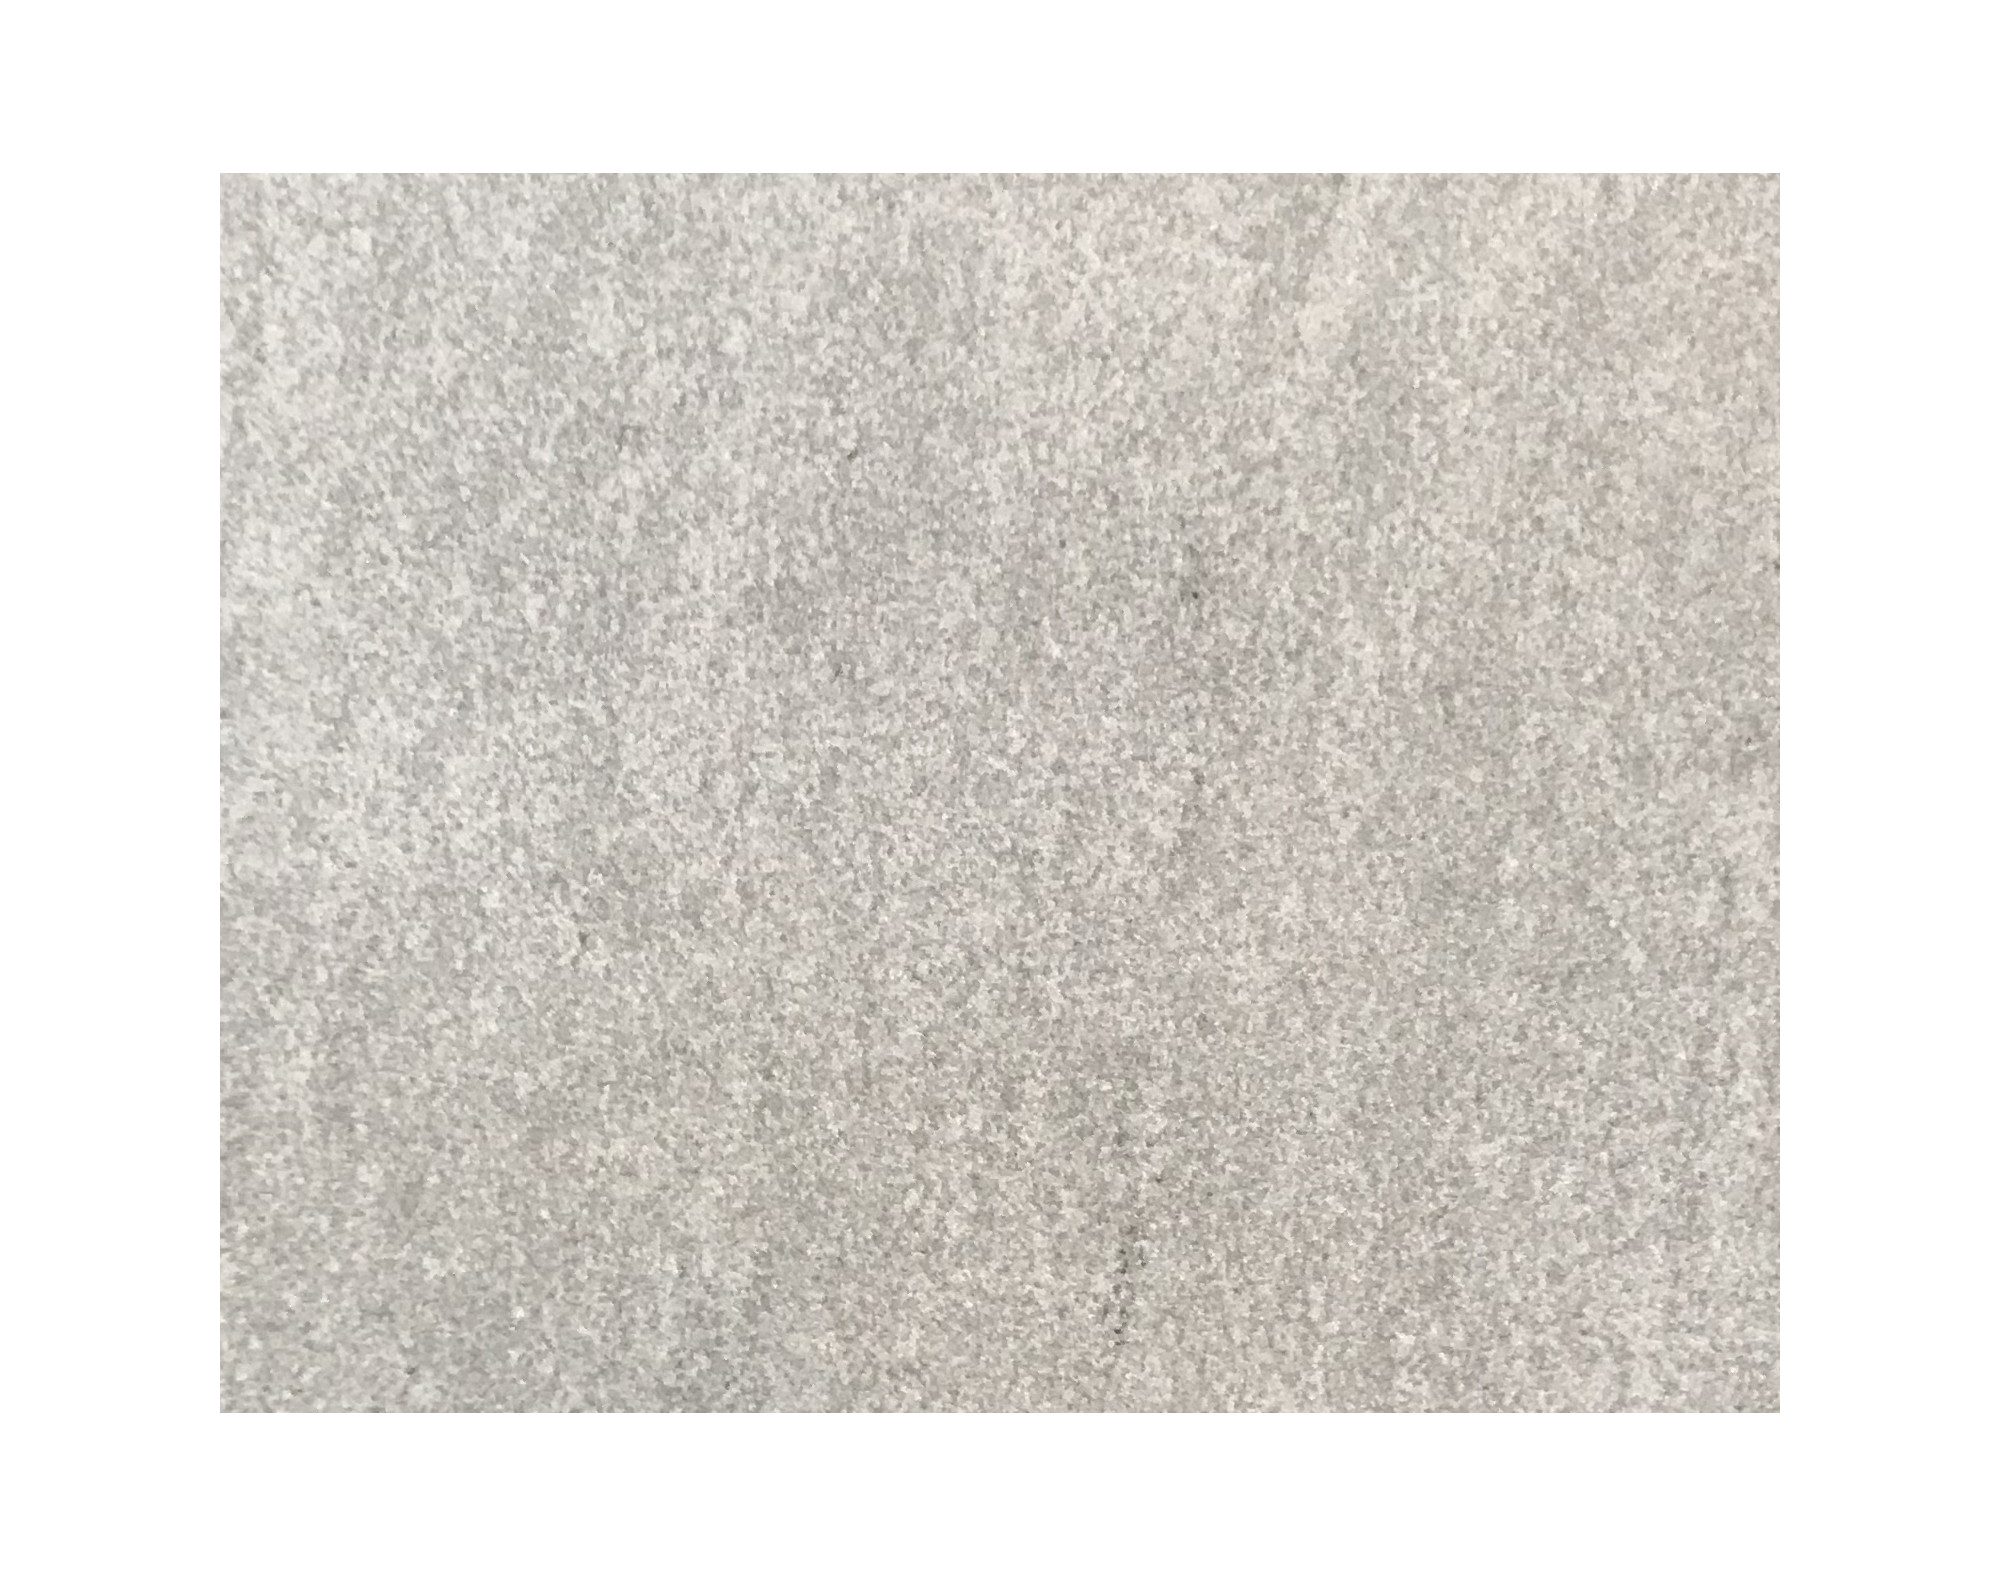 Harmo roc maranelloset, keramiek-serie, 8-vormig d:6,00mx9,20m, zand grijs, keramisch porselein